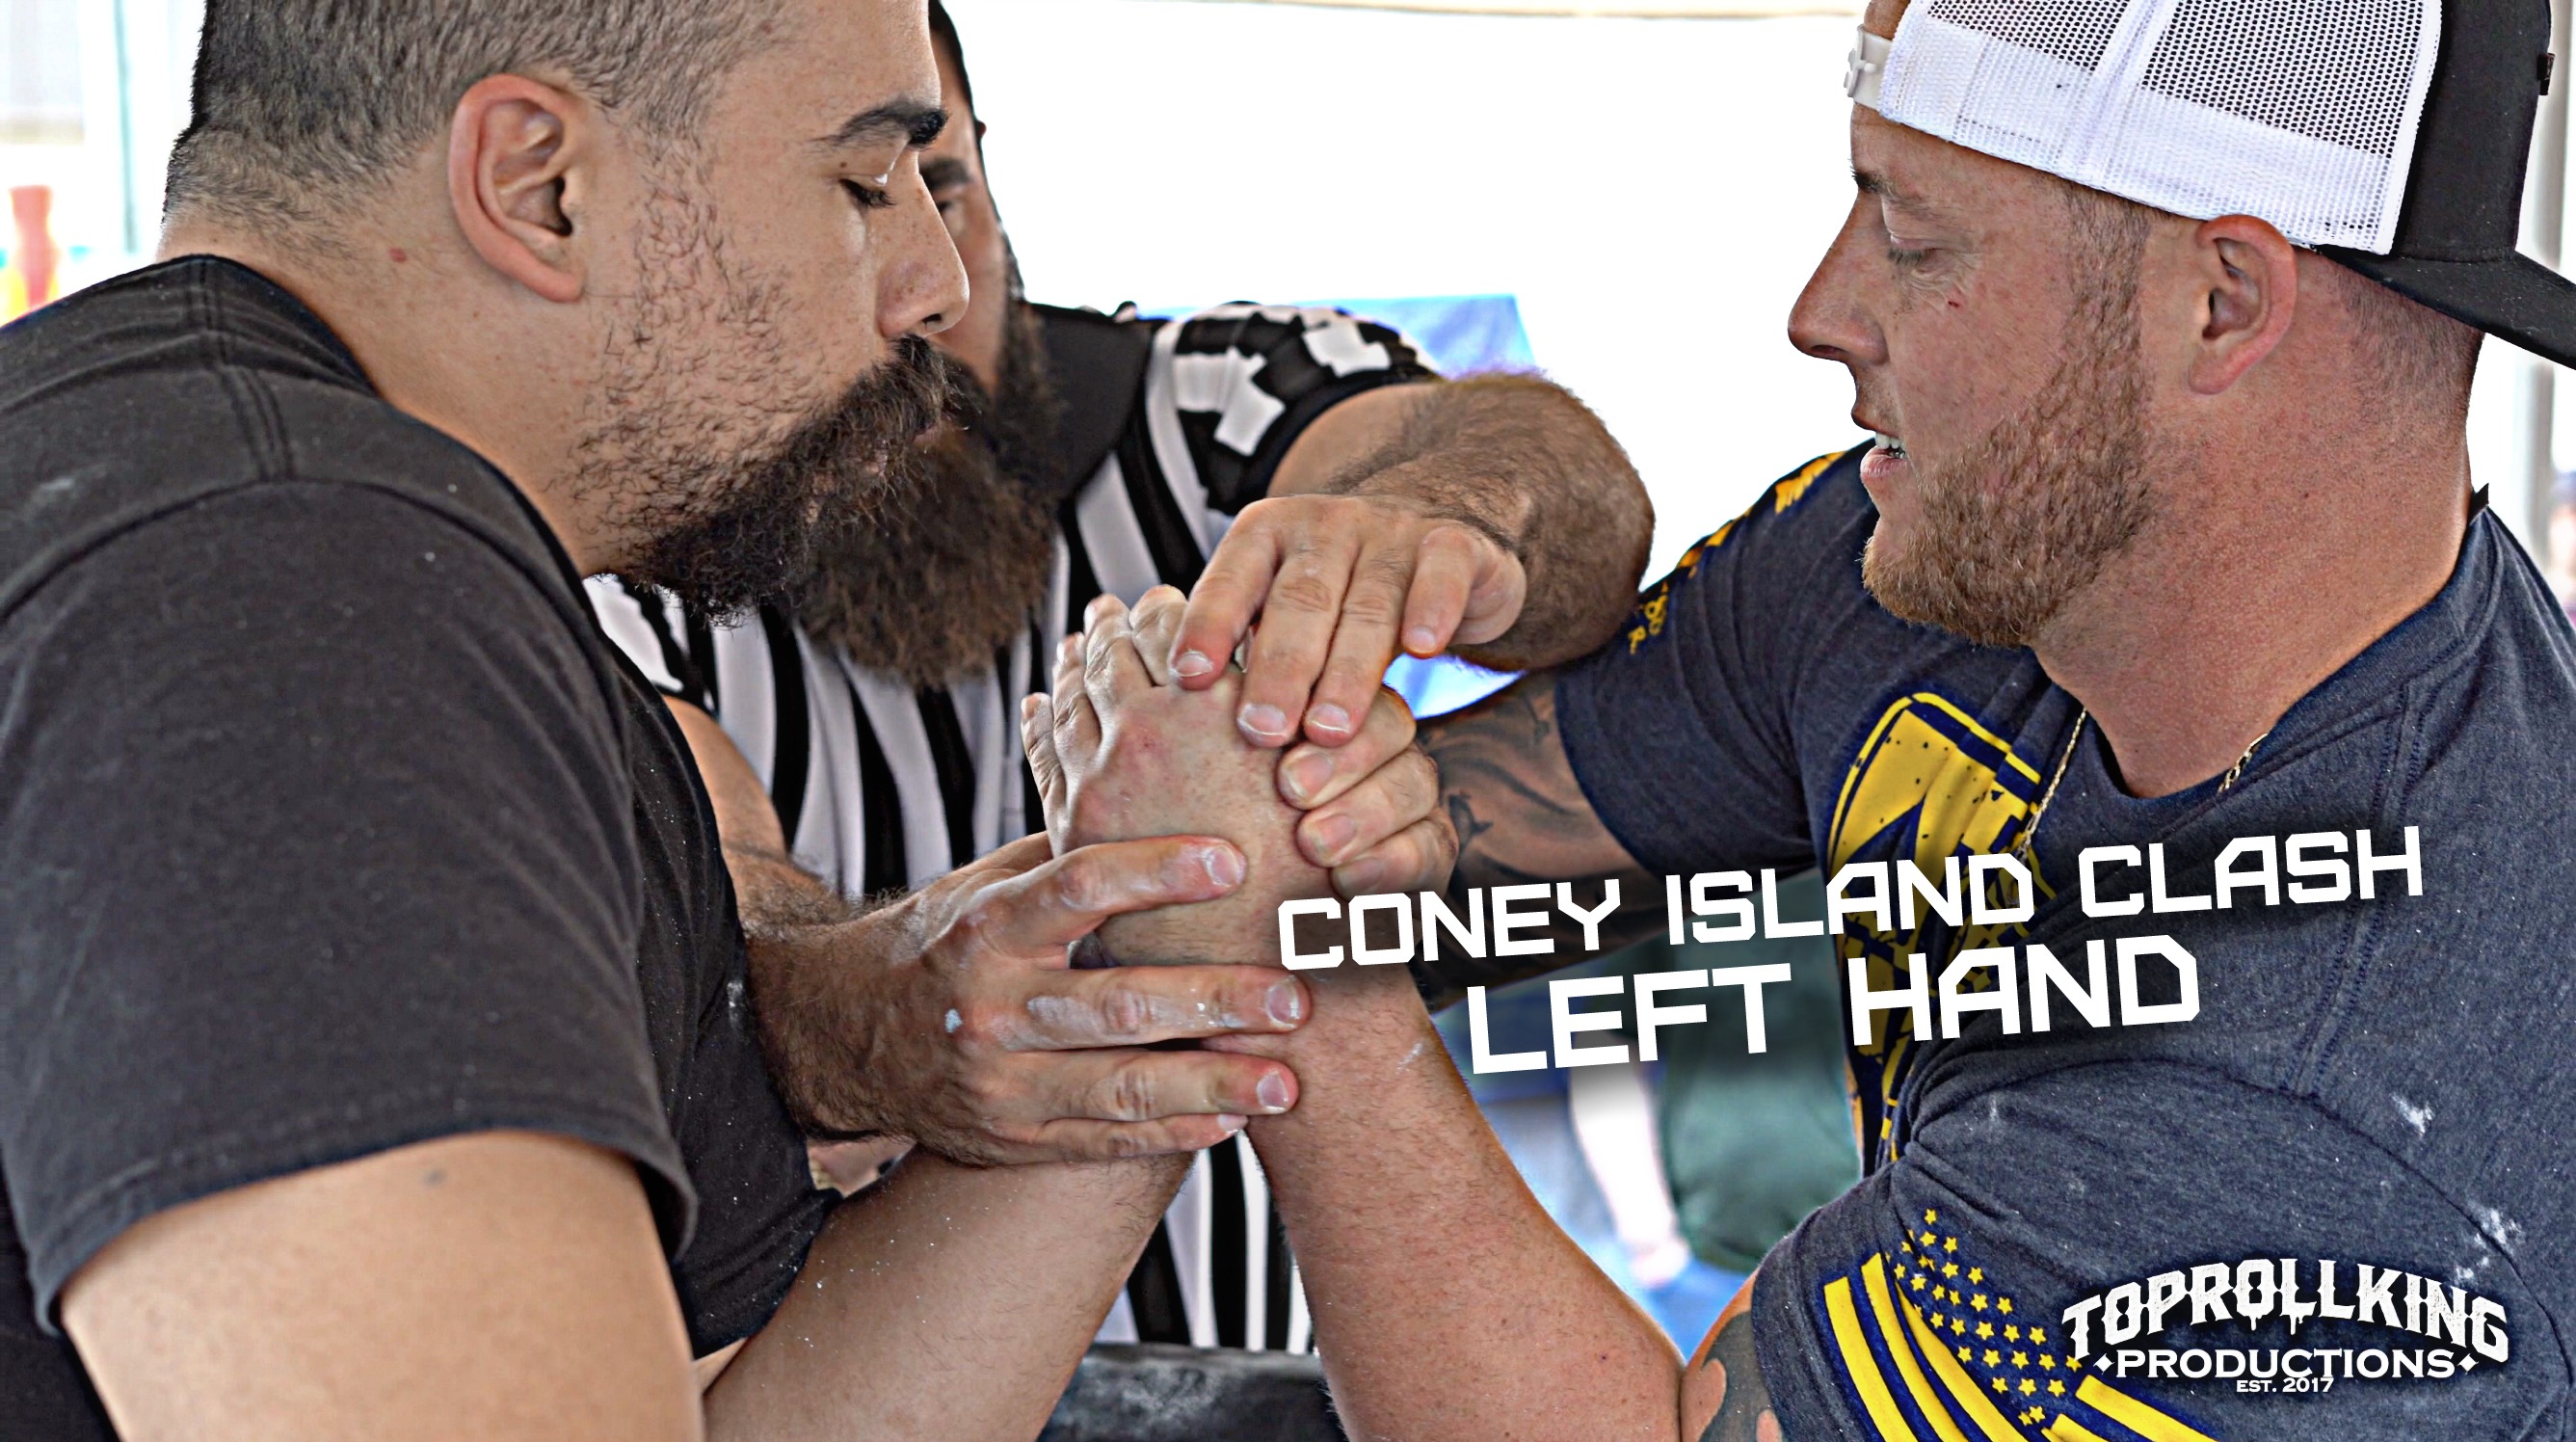 VIDEO: Coney Island Clash Armwrestling event LH